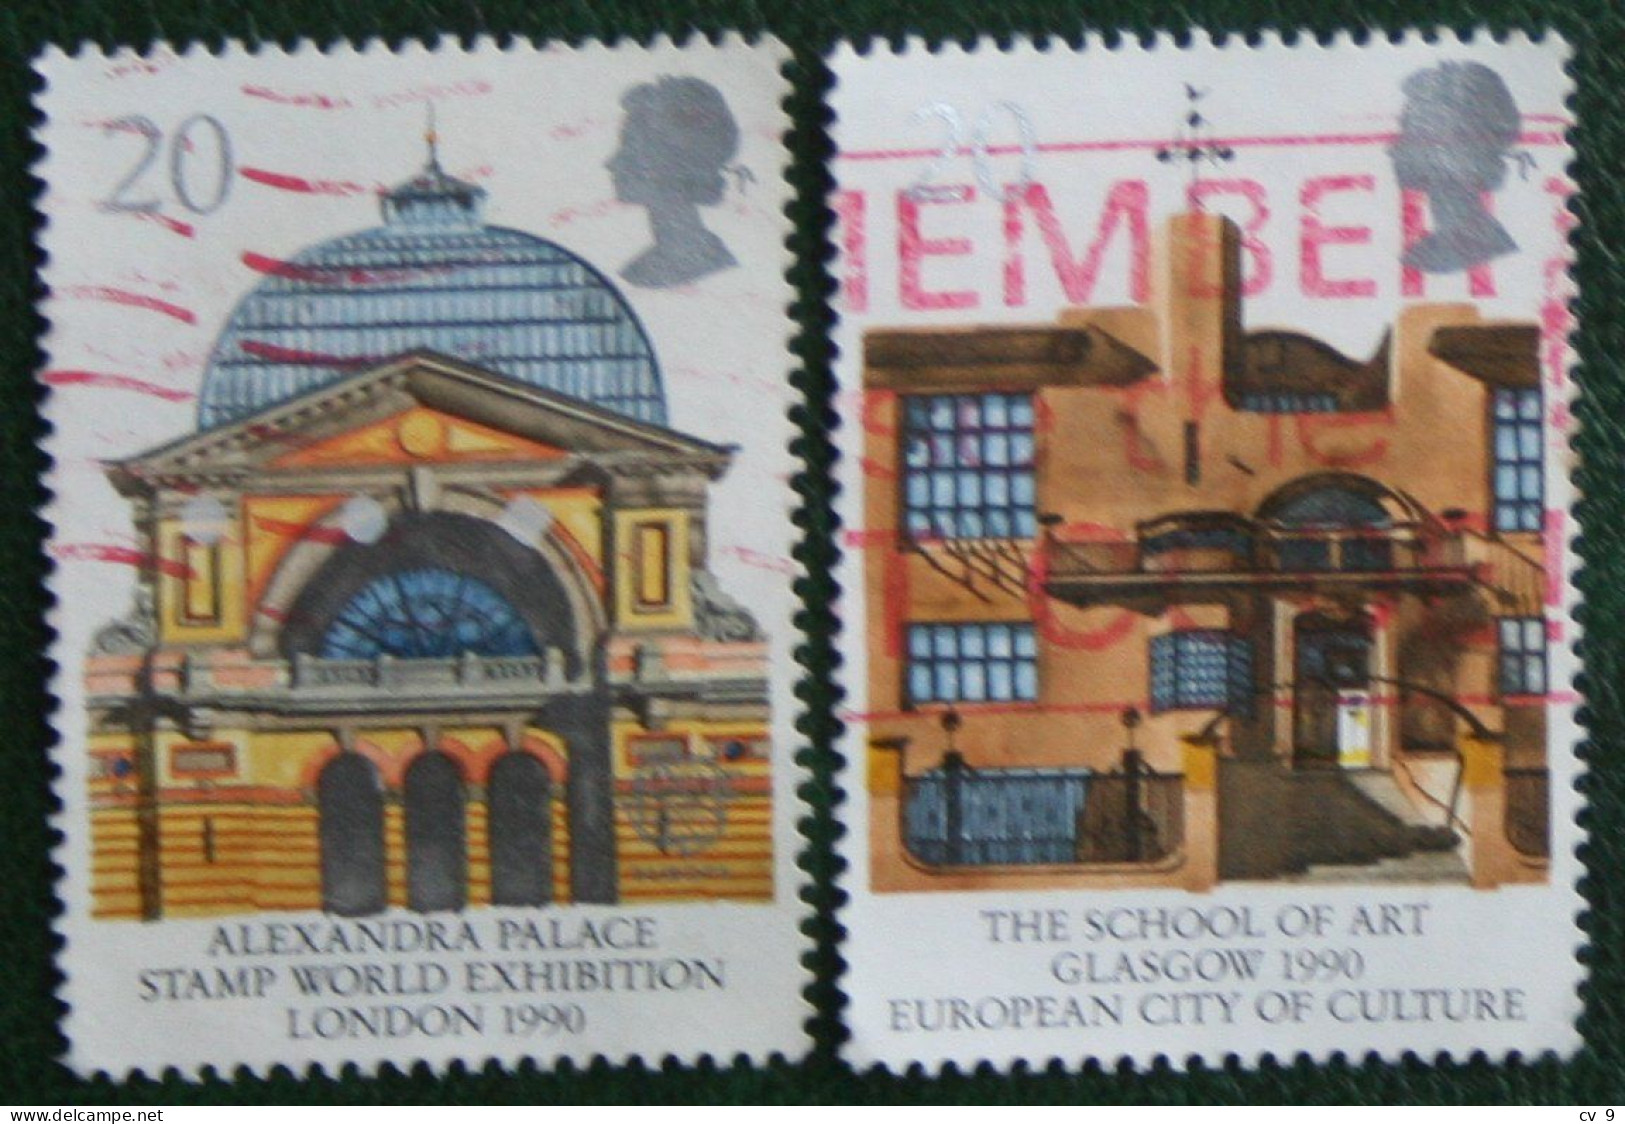 EUROPA Buildings London Glasgow (Mi 1261 1263) 1990 Used Gebruikt Oblitere ENGLAND GRANDE-BRETAGNE GB GREAT BRITAIN - Used Stamps